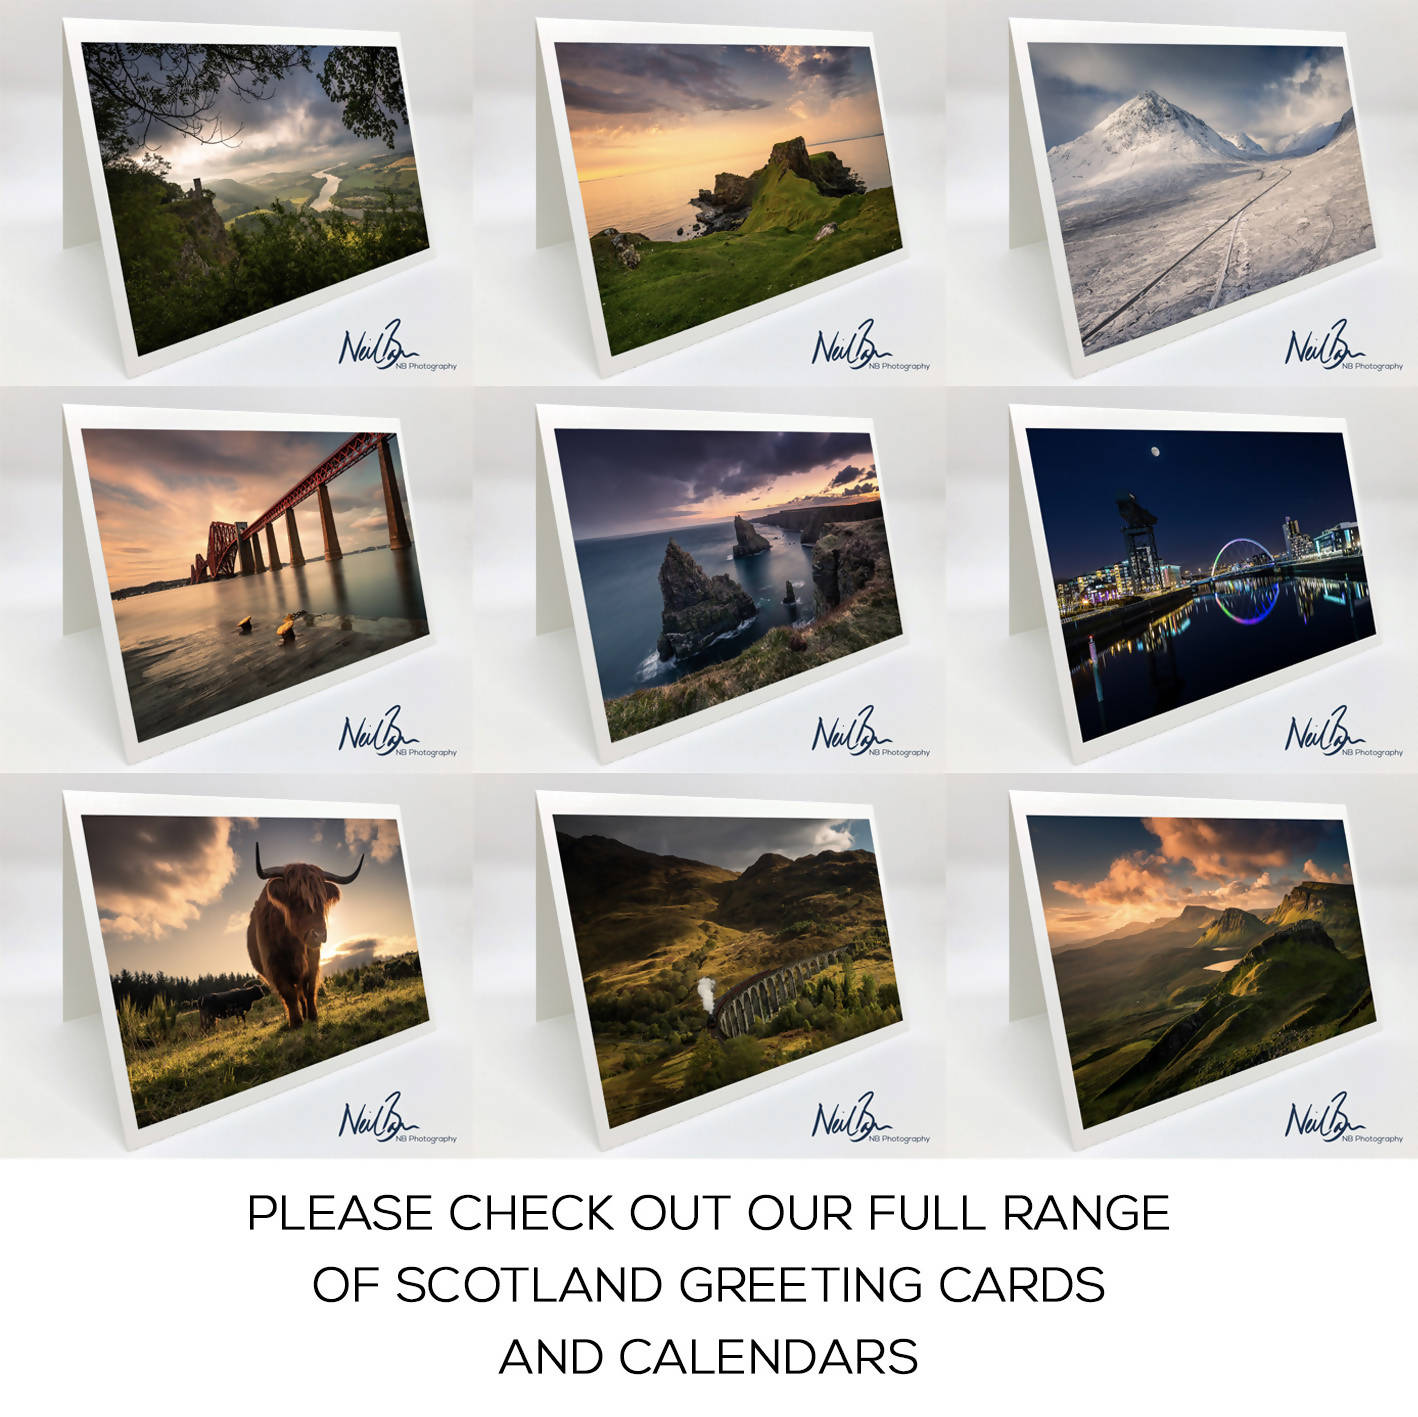 Slioch, Wester Ross - Scotland Greeting Card - Blank Inside